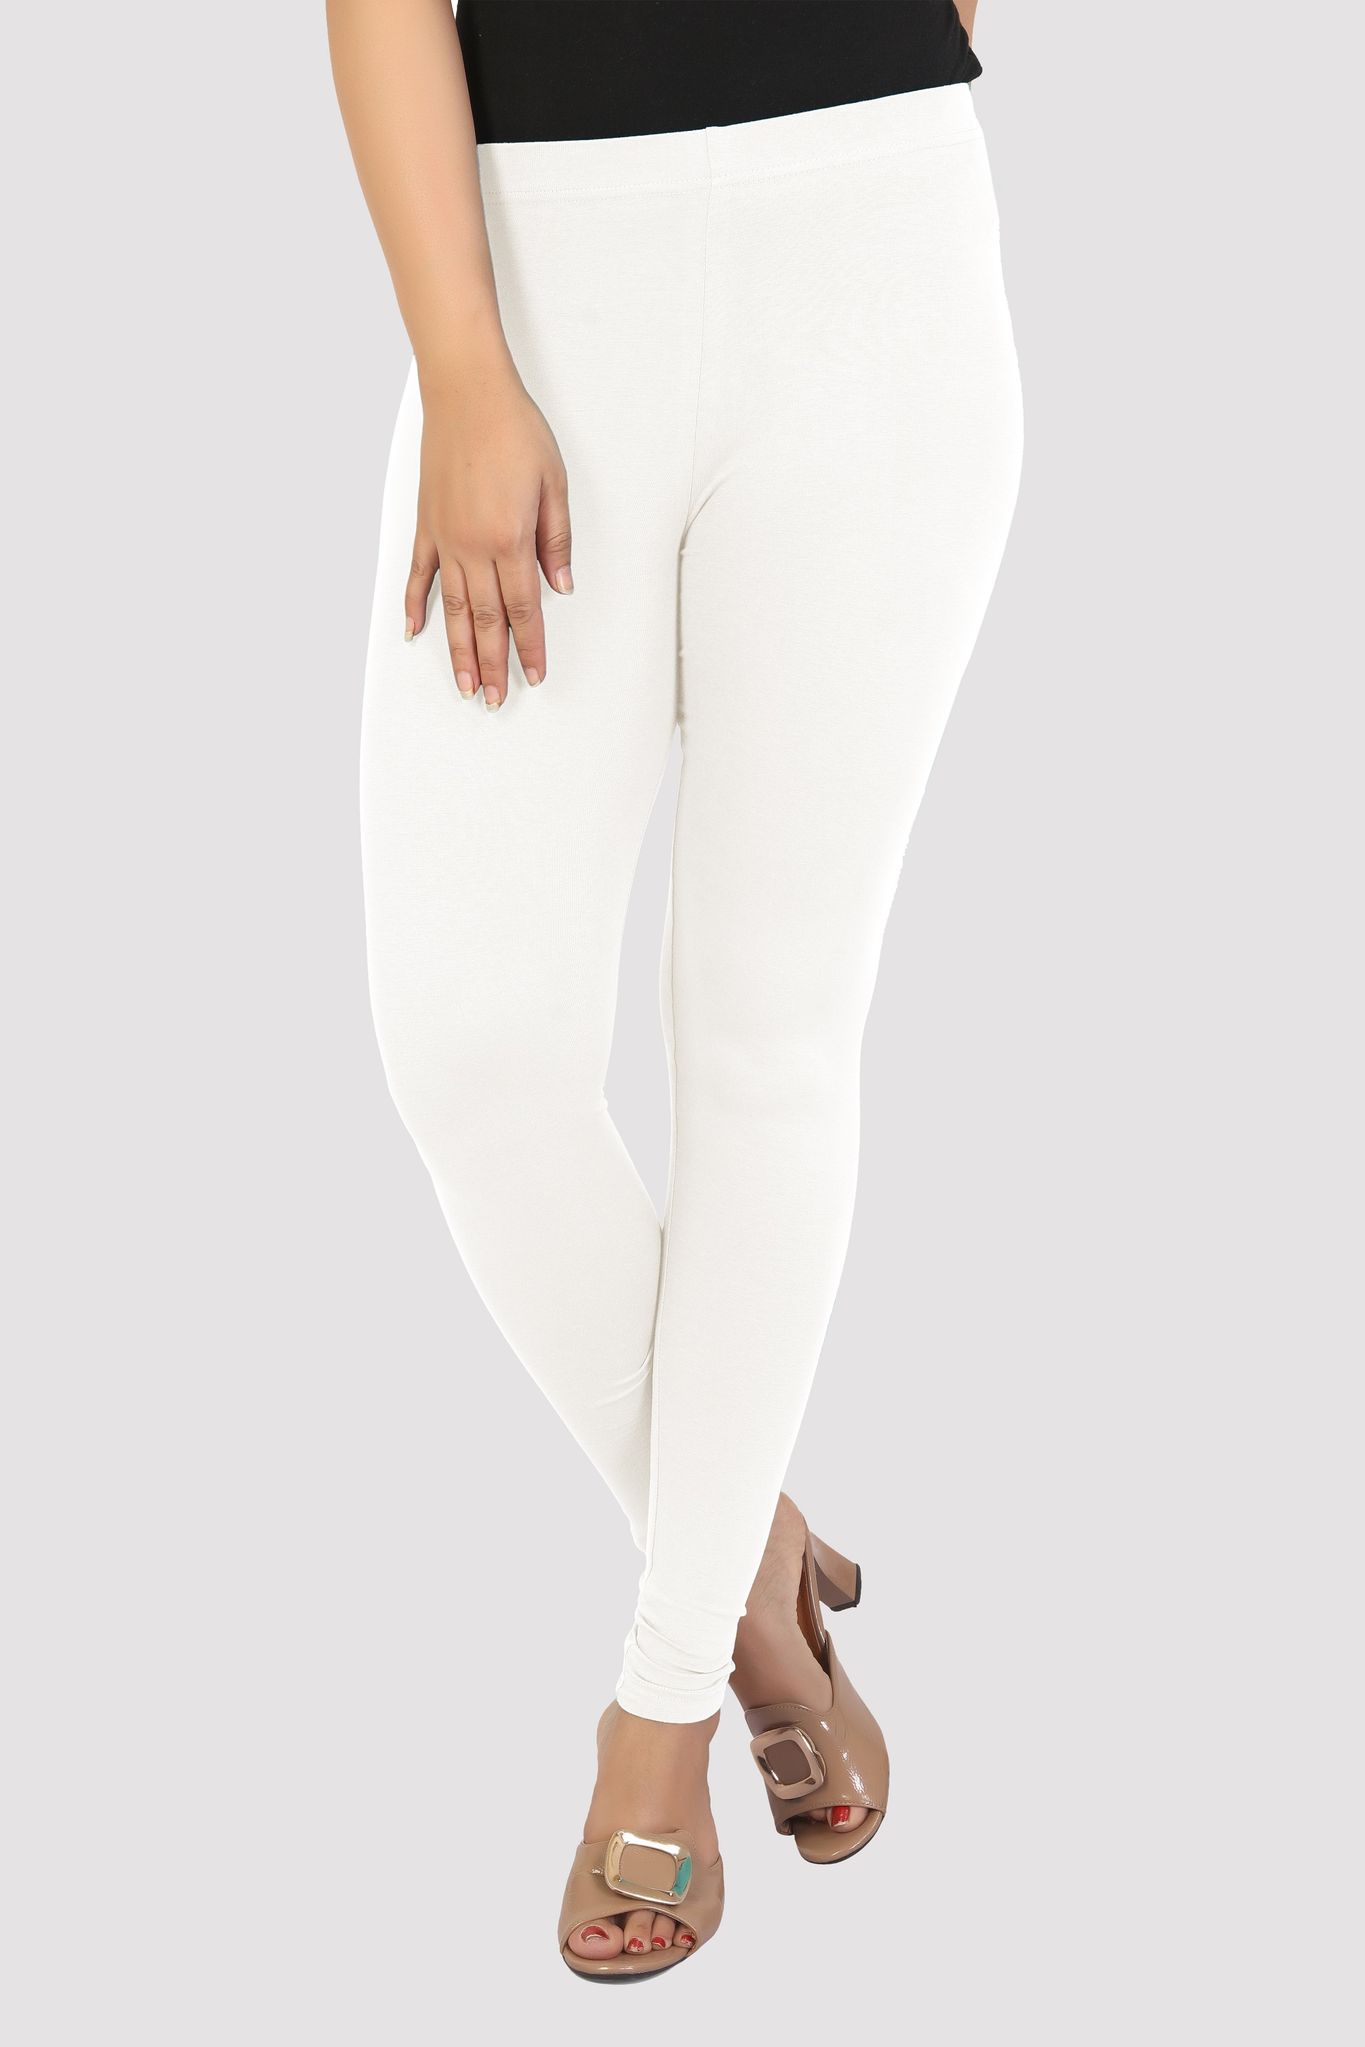 LUX LYRA Women's Cotton Ankle Length Off White Legging Free Shipping